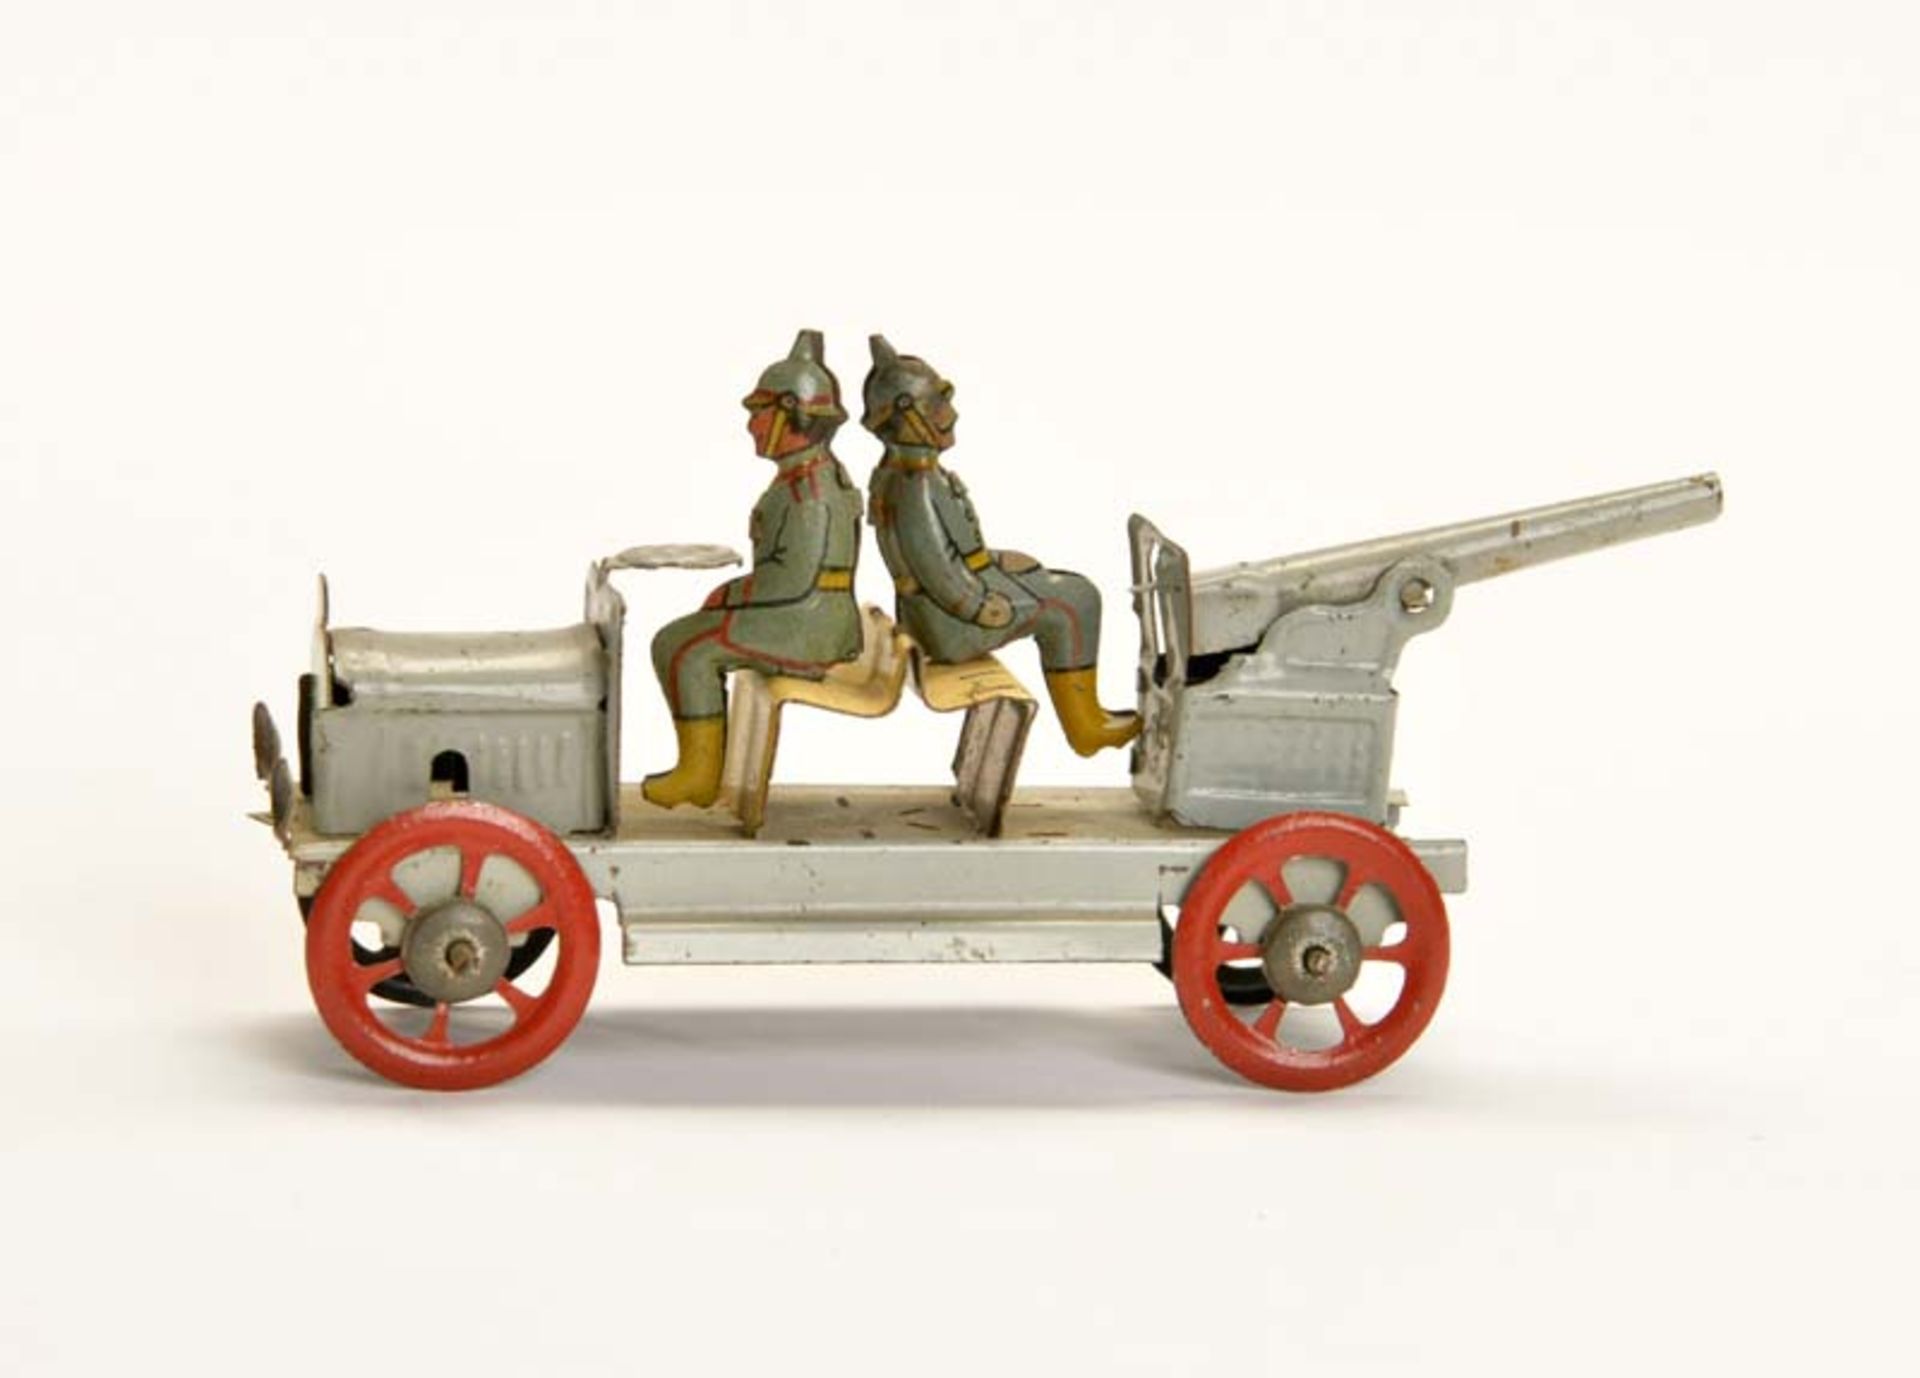 Meier, Penny Toy Militär LKW mit Geschütz, Germany VK, 11 cm, Blech, min. LM